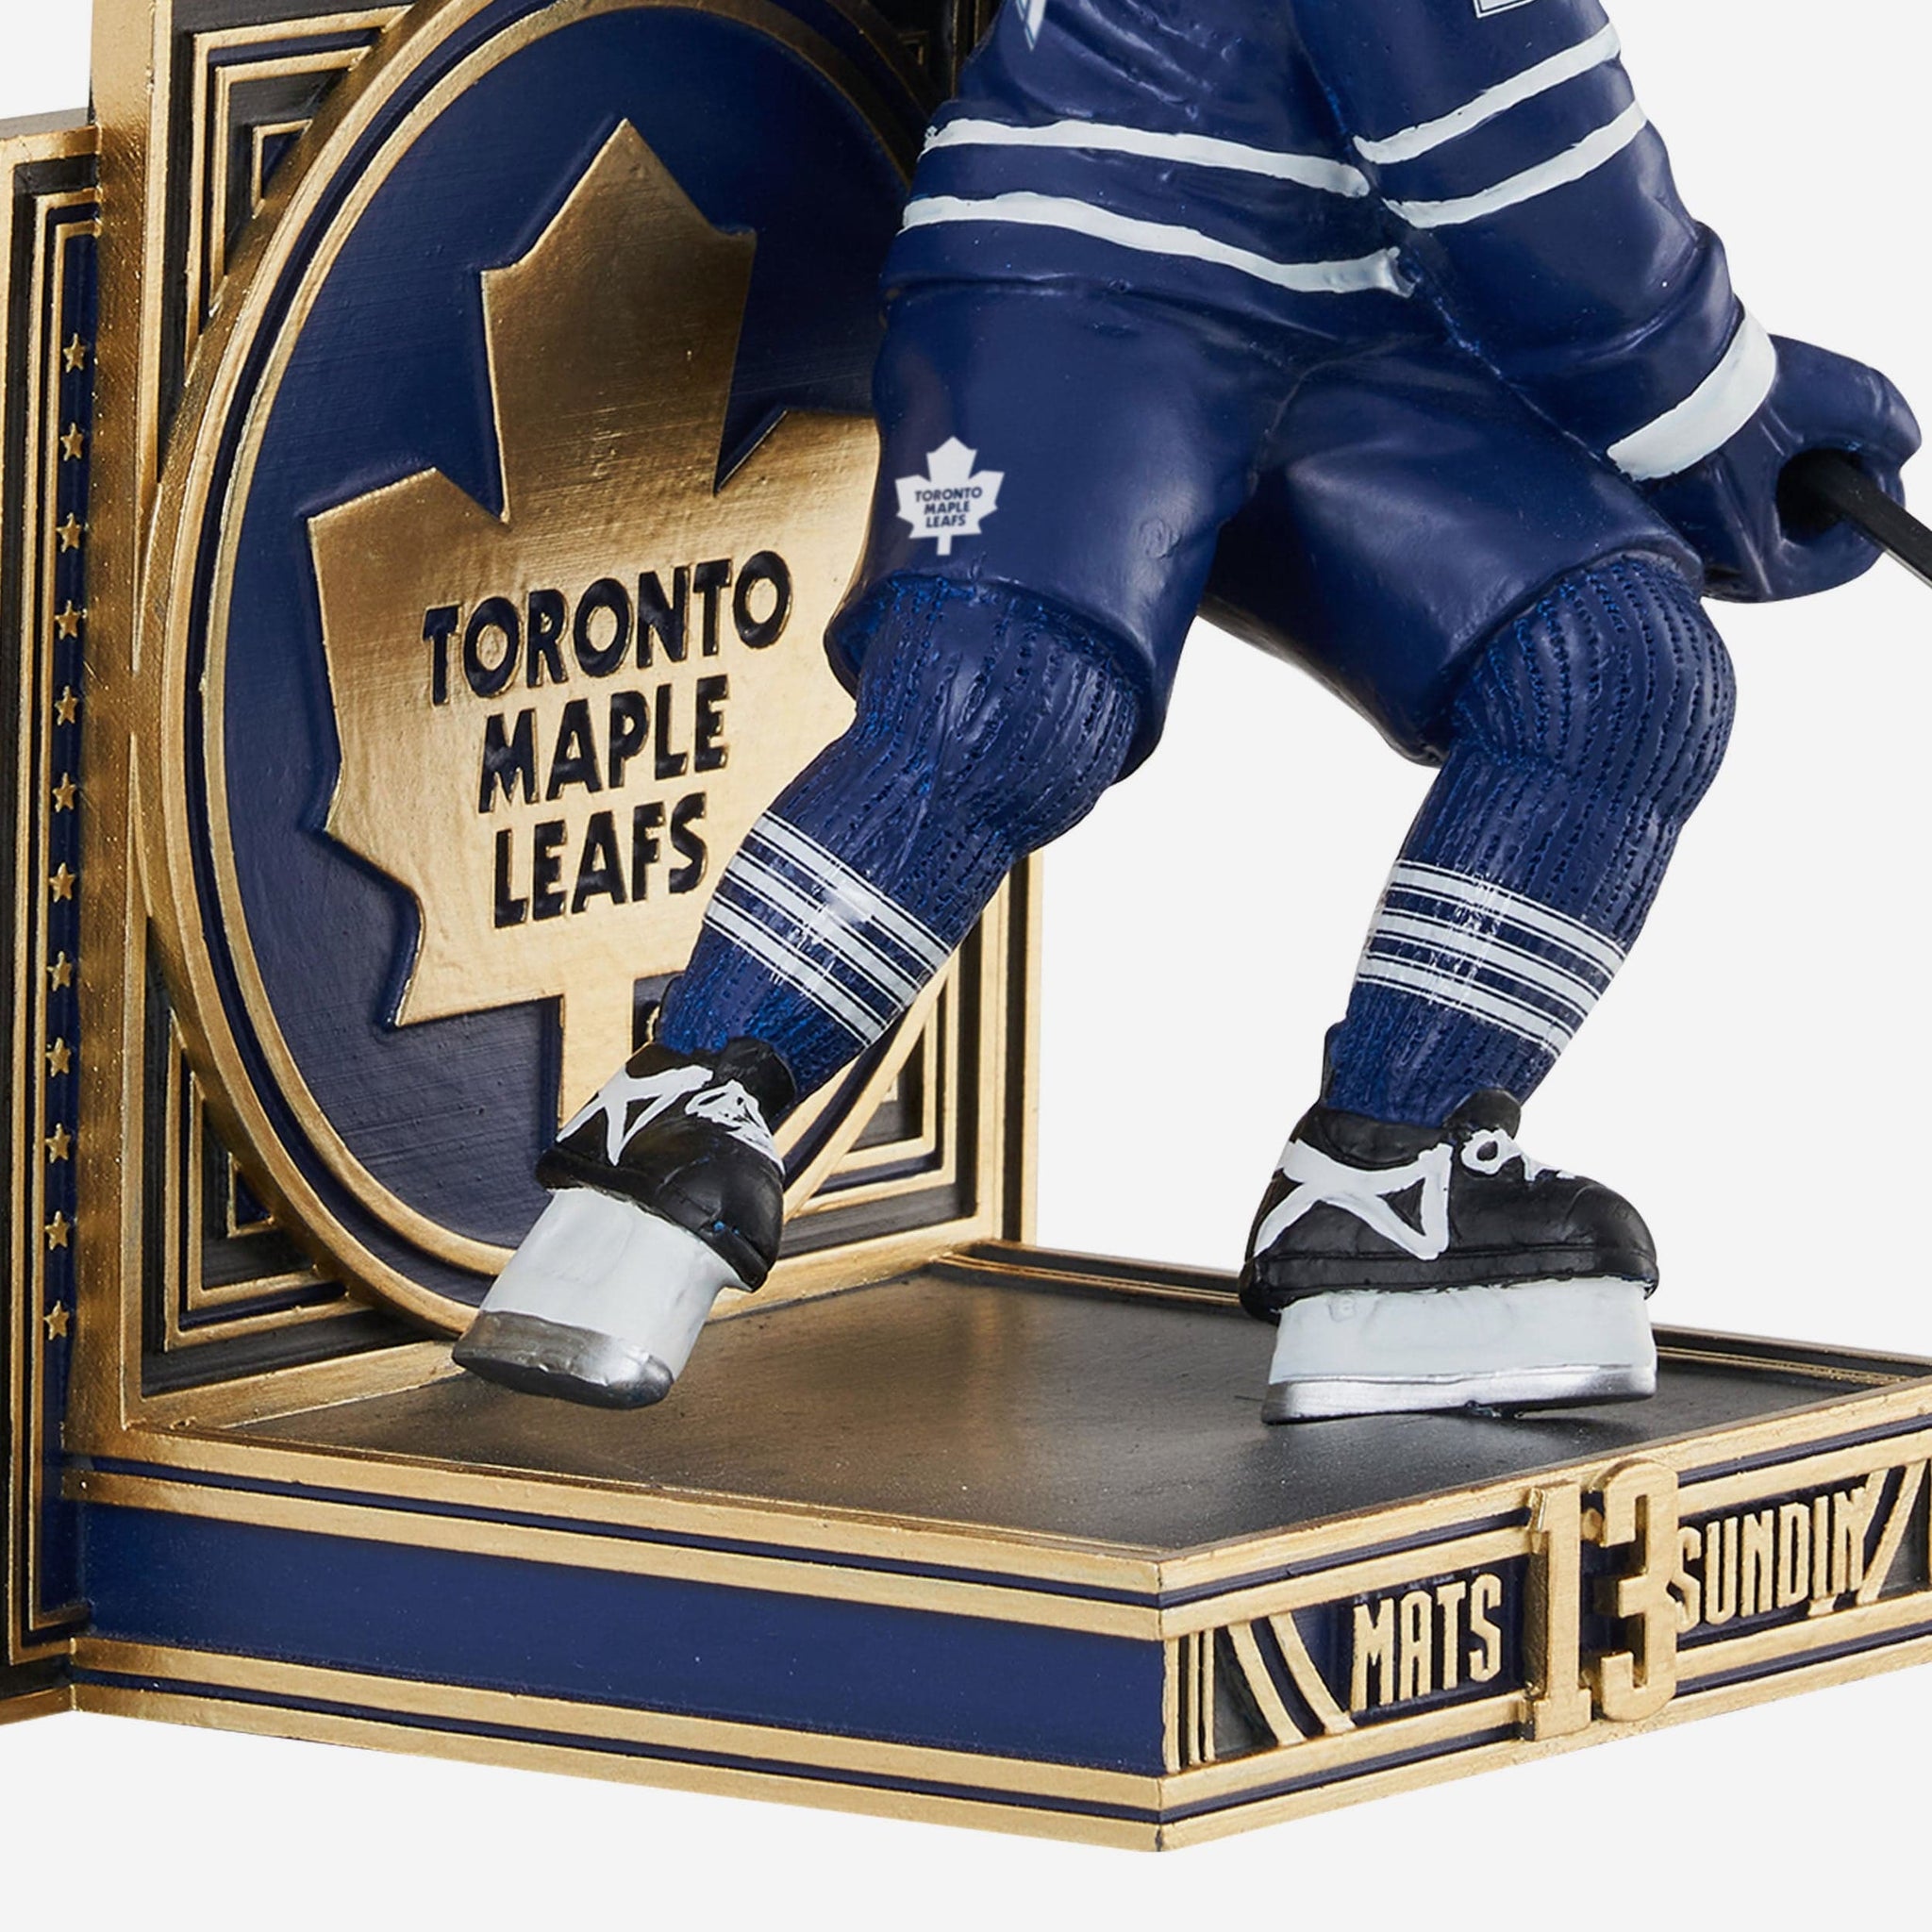 Mats Sundin Autographed Blue Toronto Maple Leafs Jersey